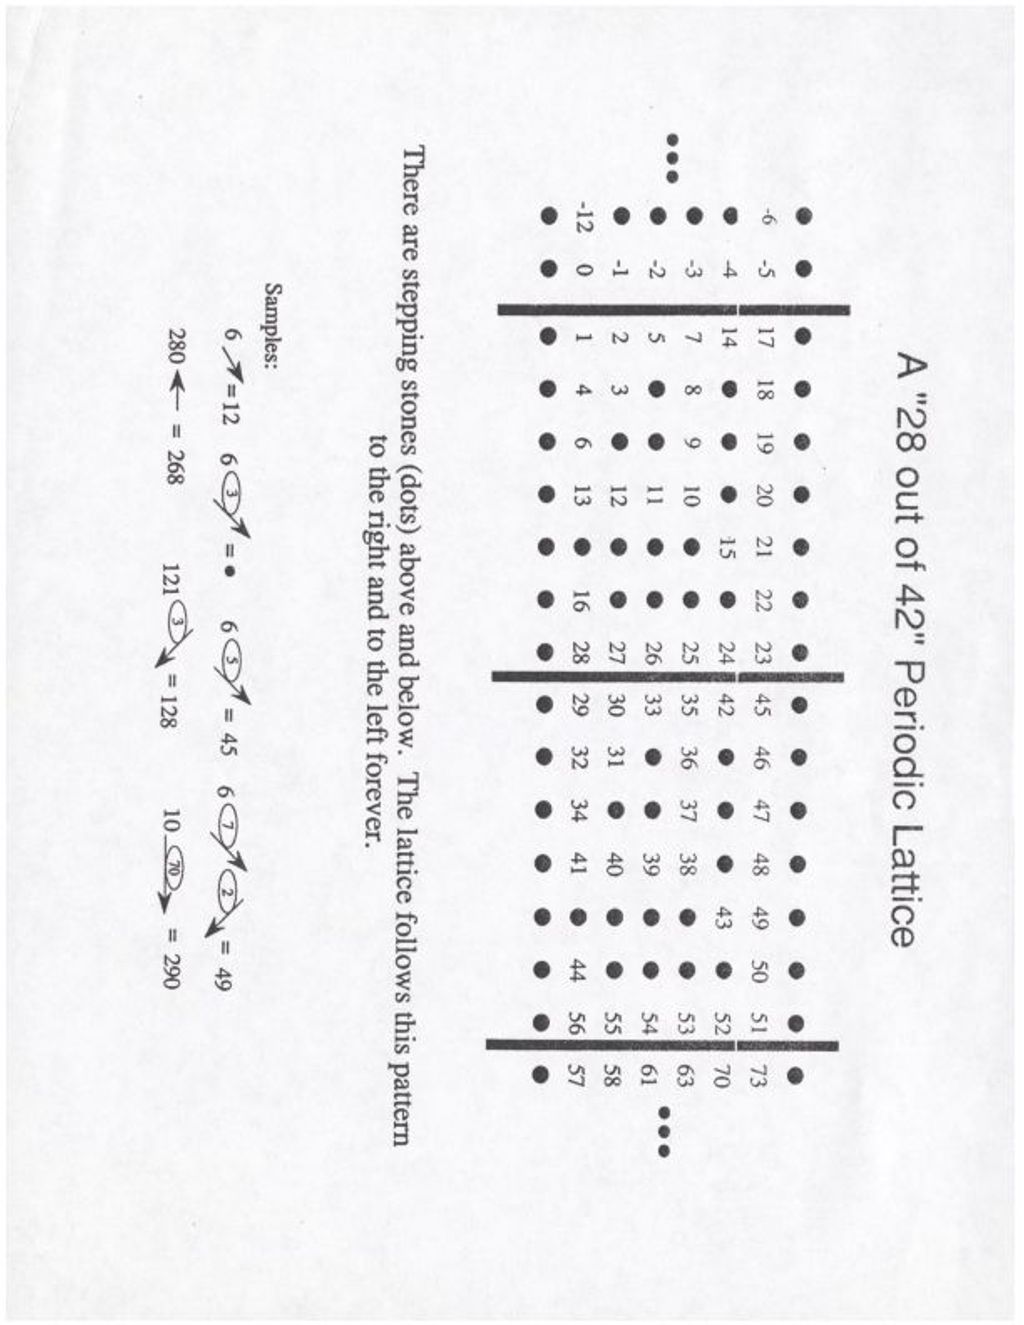 Miniature of A 28 out of 42 Periodic Lattice (lattice  w/ examples)